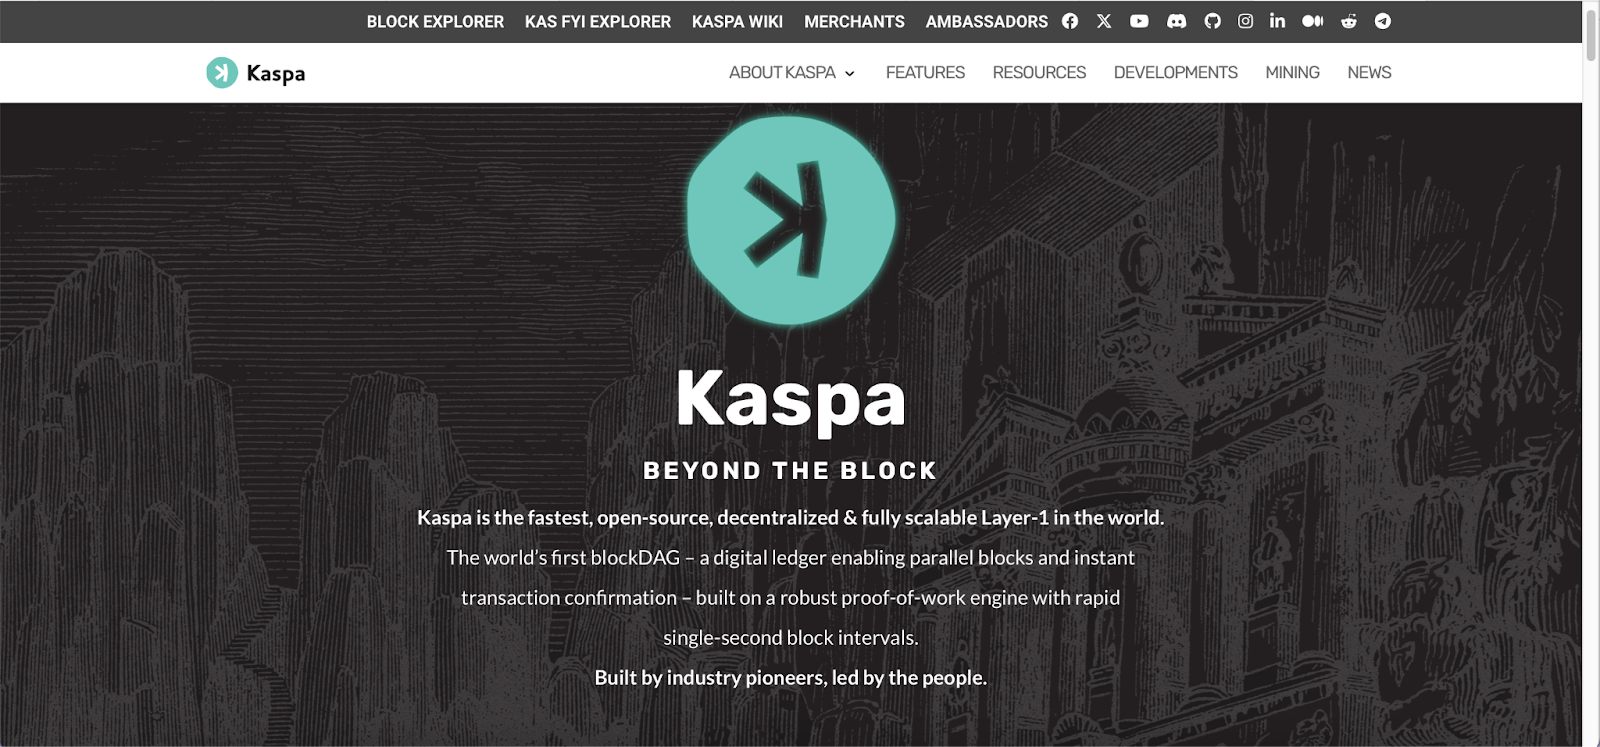 What is Kaspa